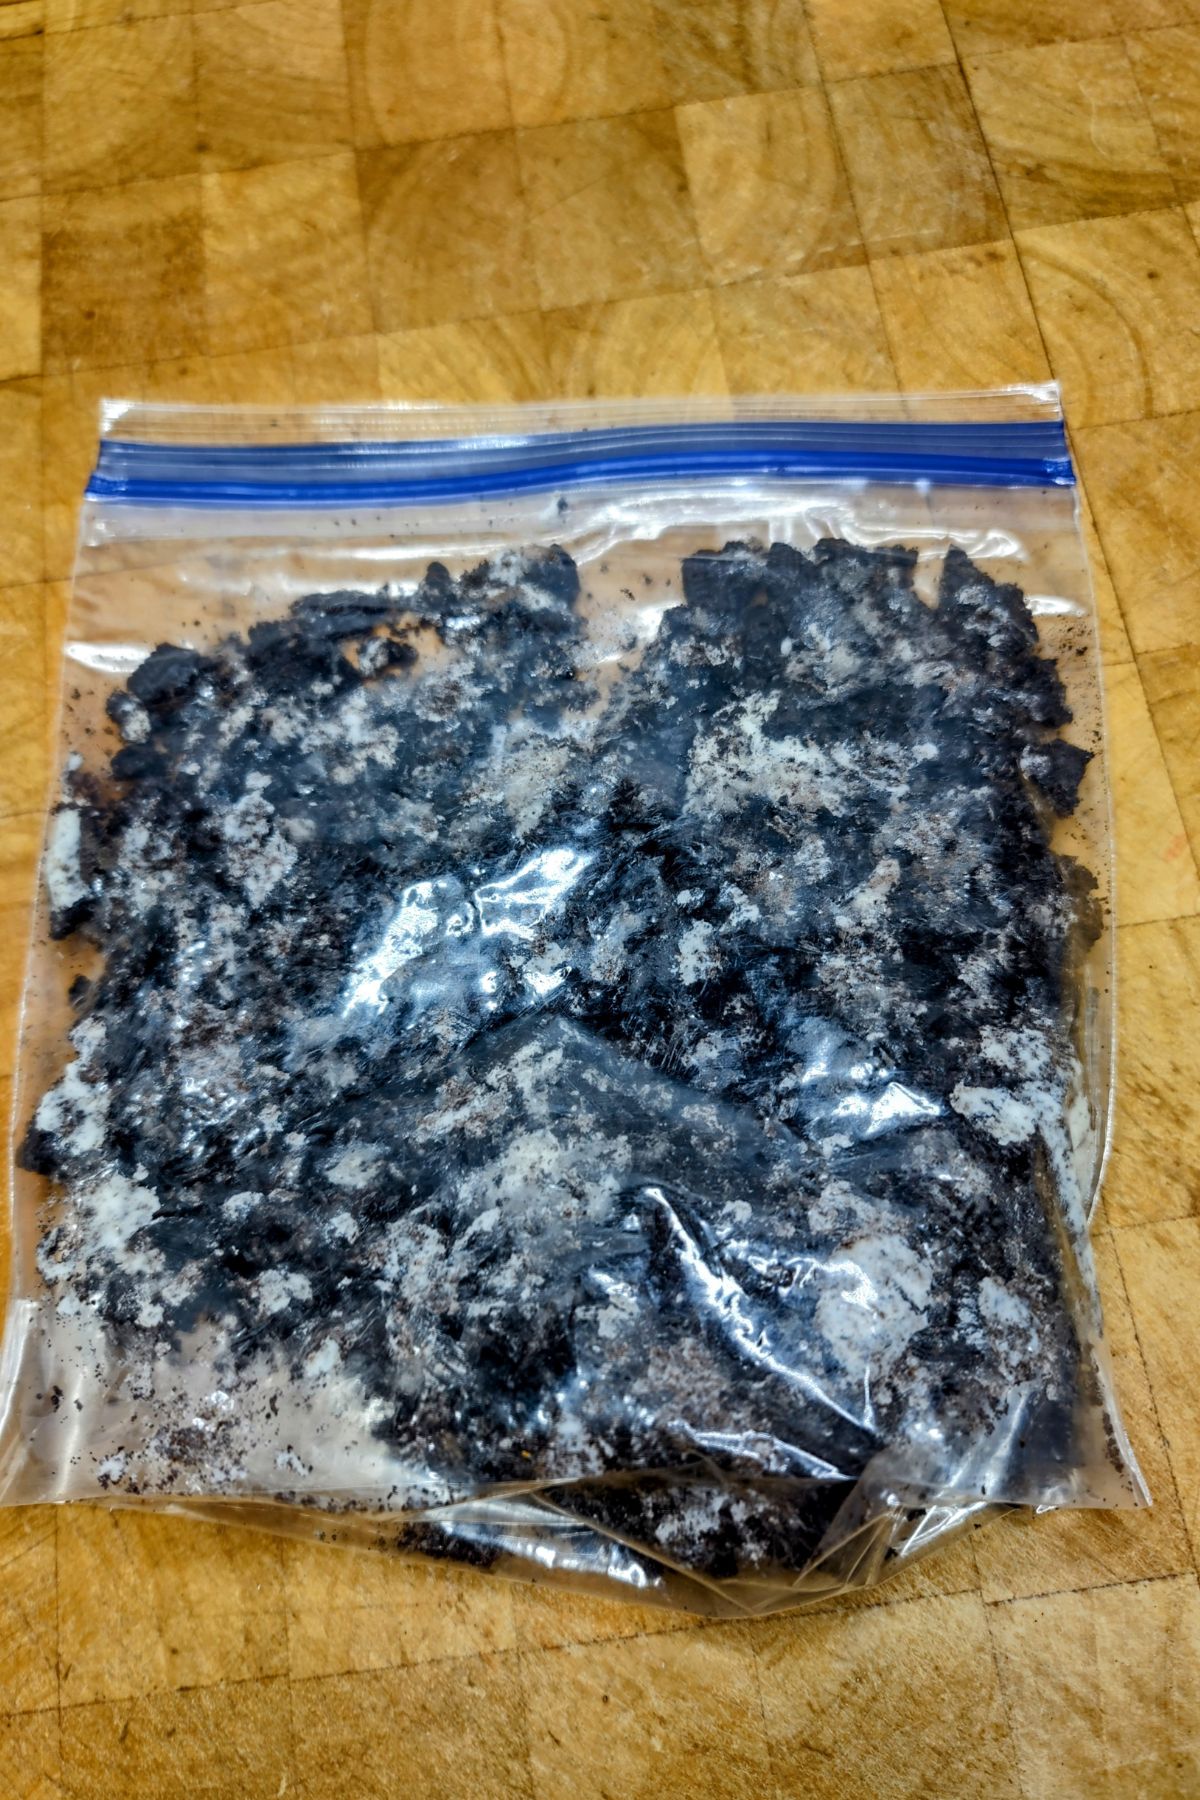 Crushed oreos in a ziplock bag.